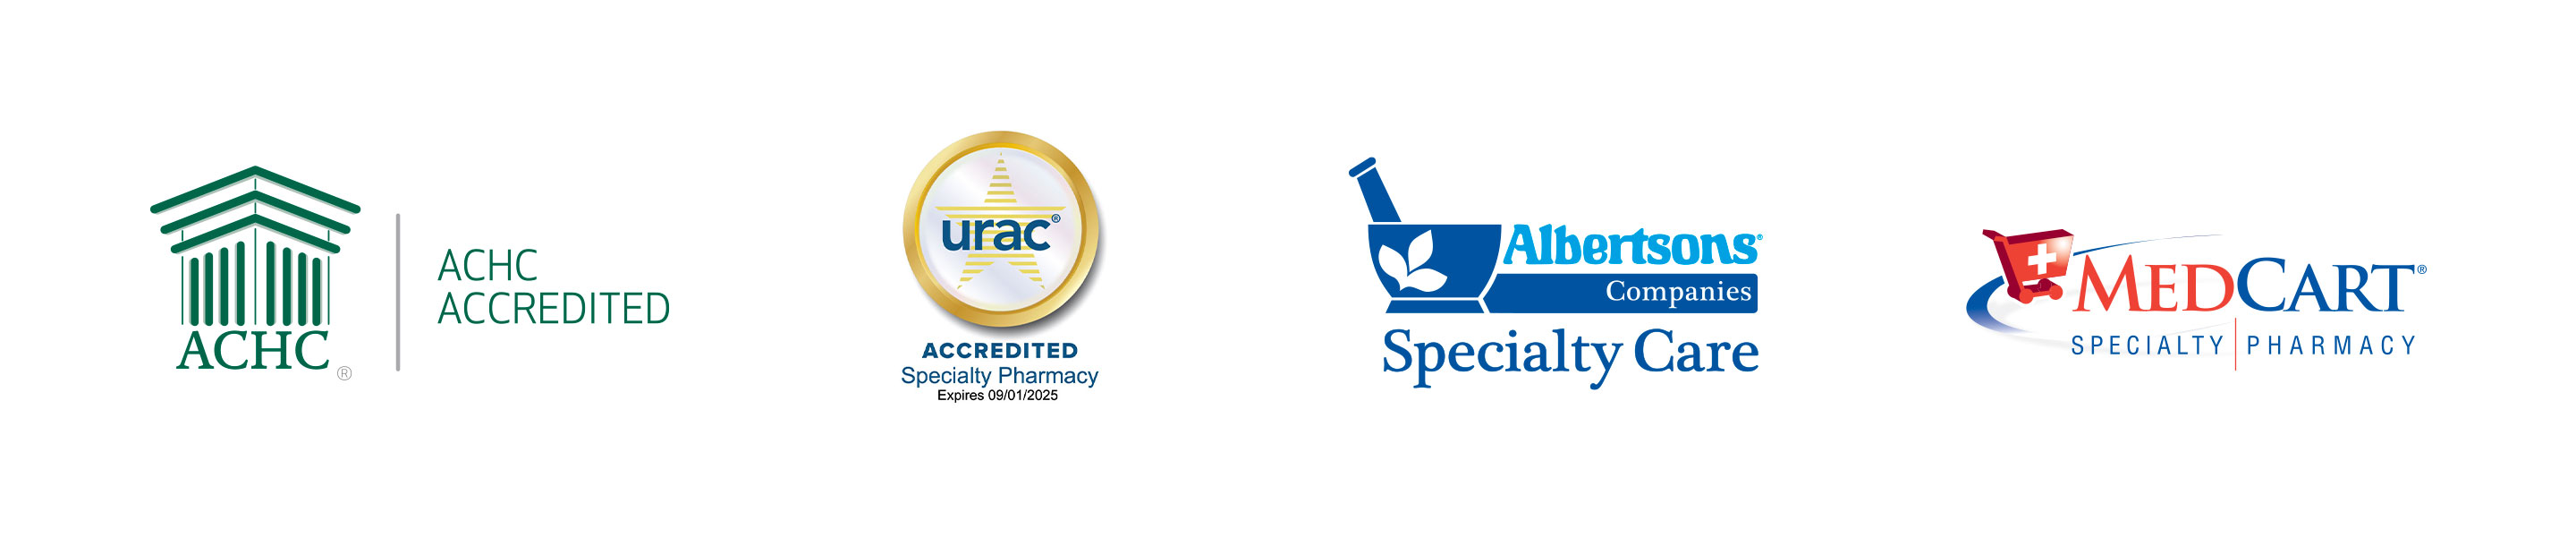 Specialty Care, ADHC, URAC and MedCart logos